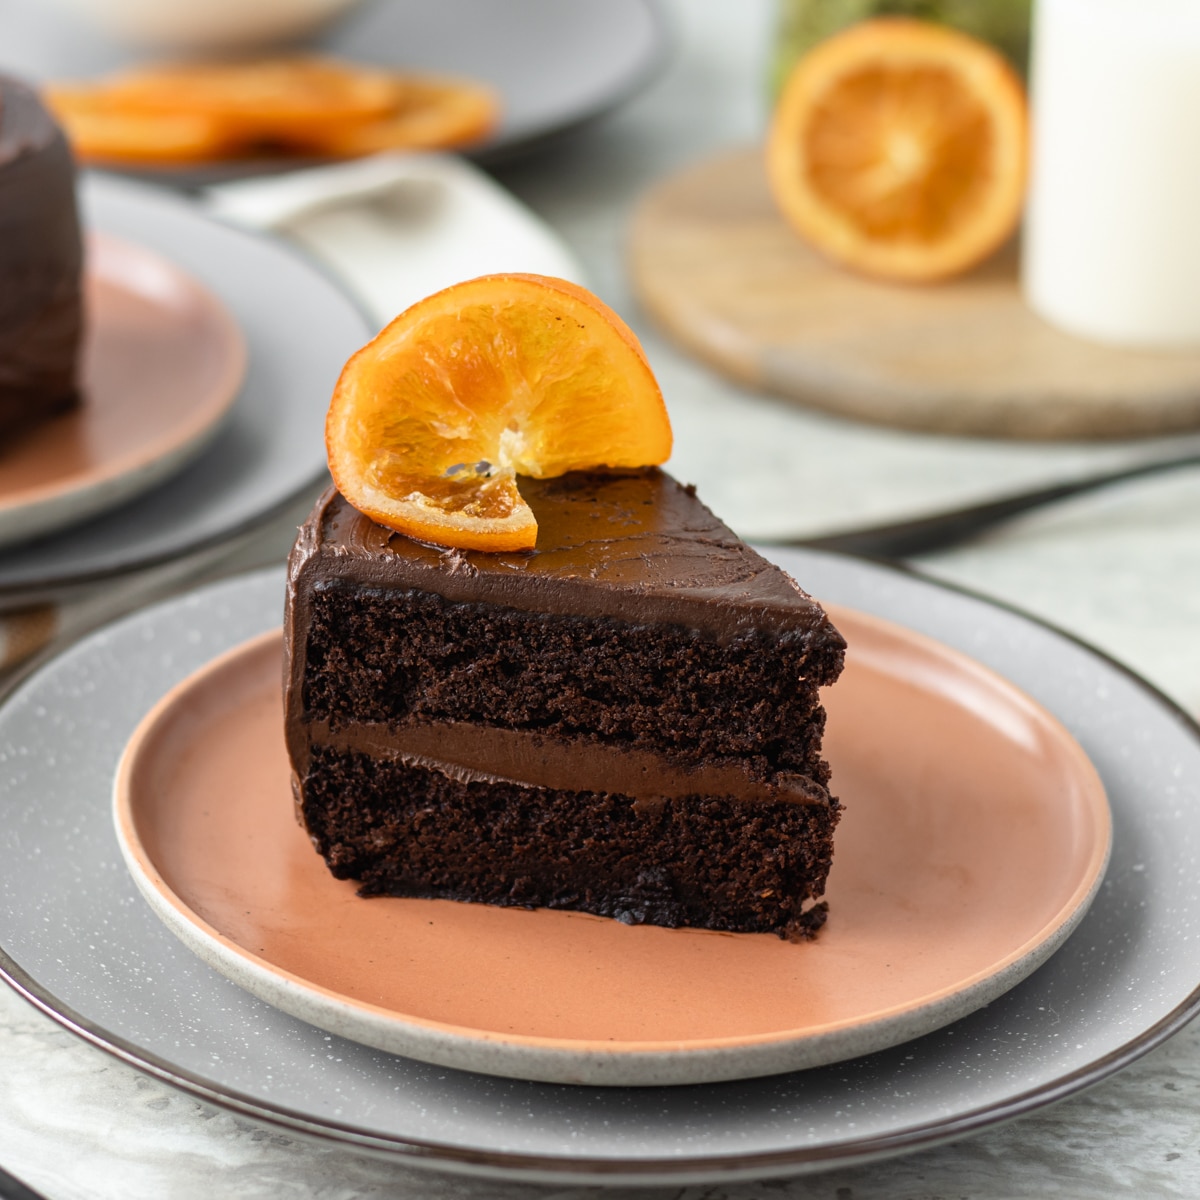 Chocolate Orange Cake for Two